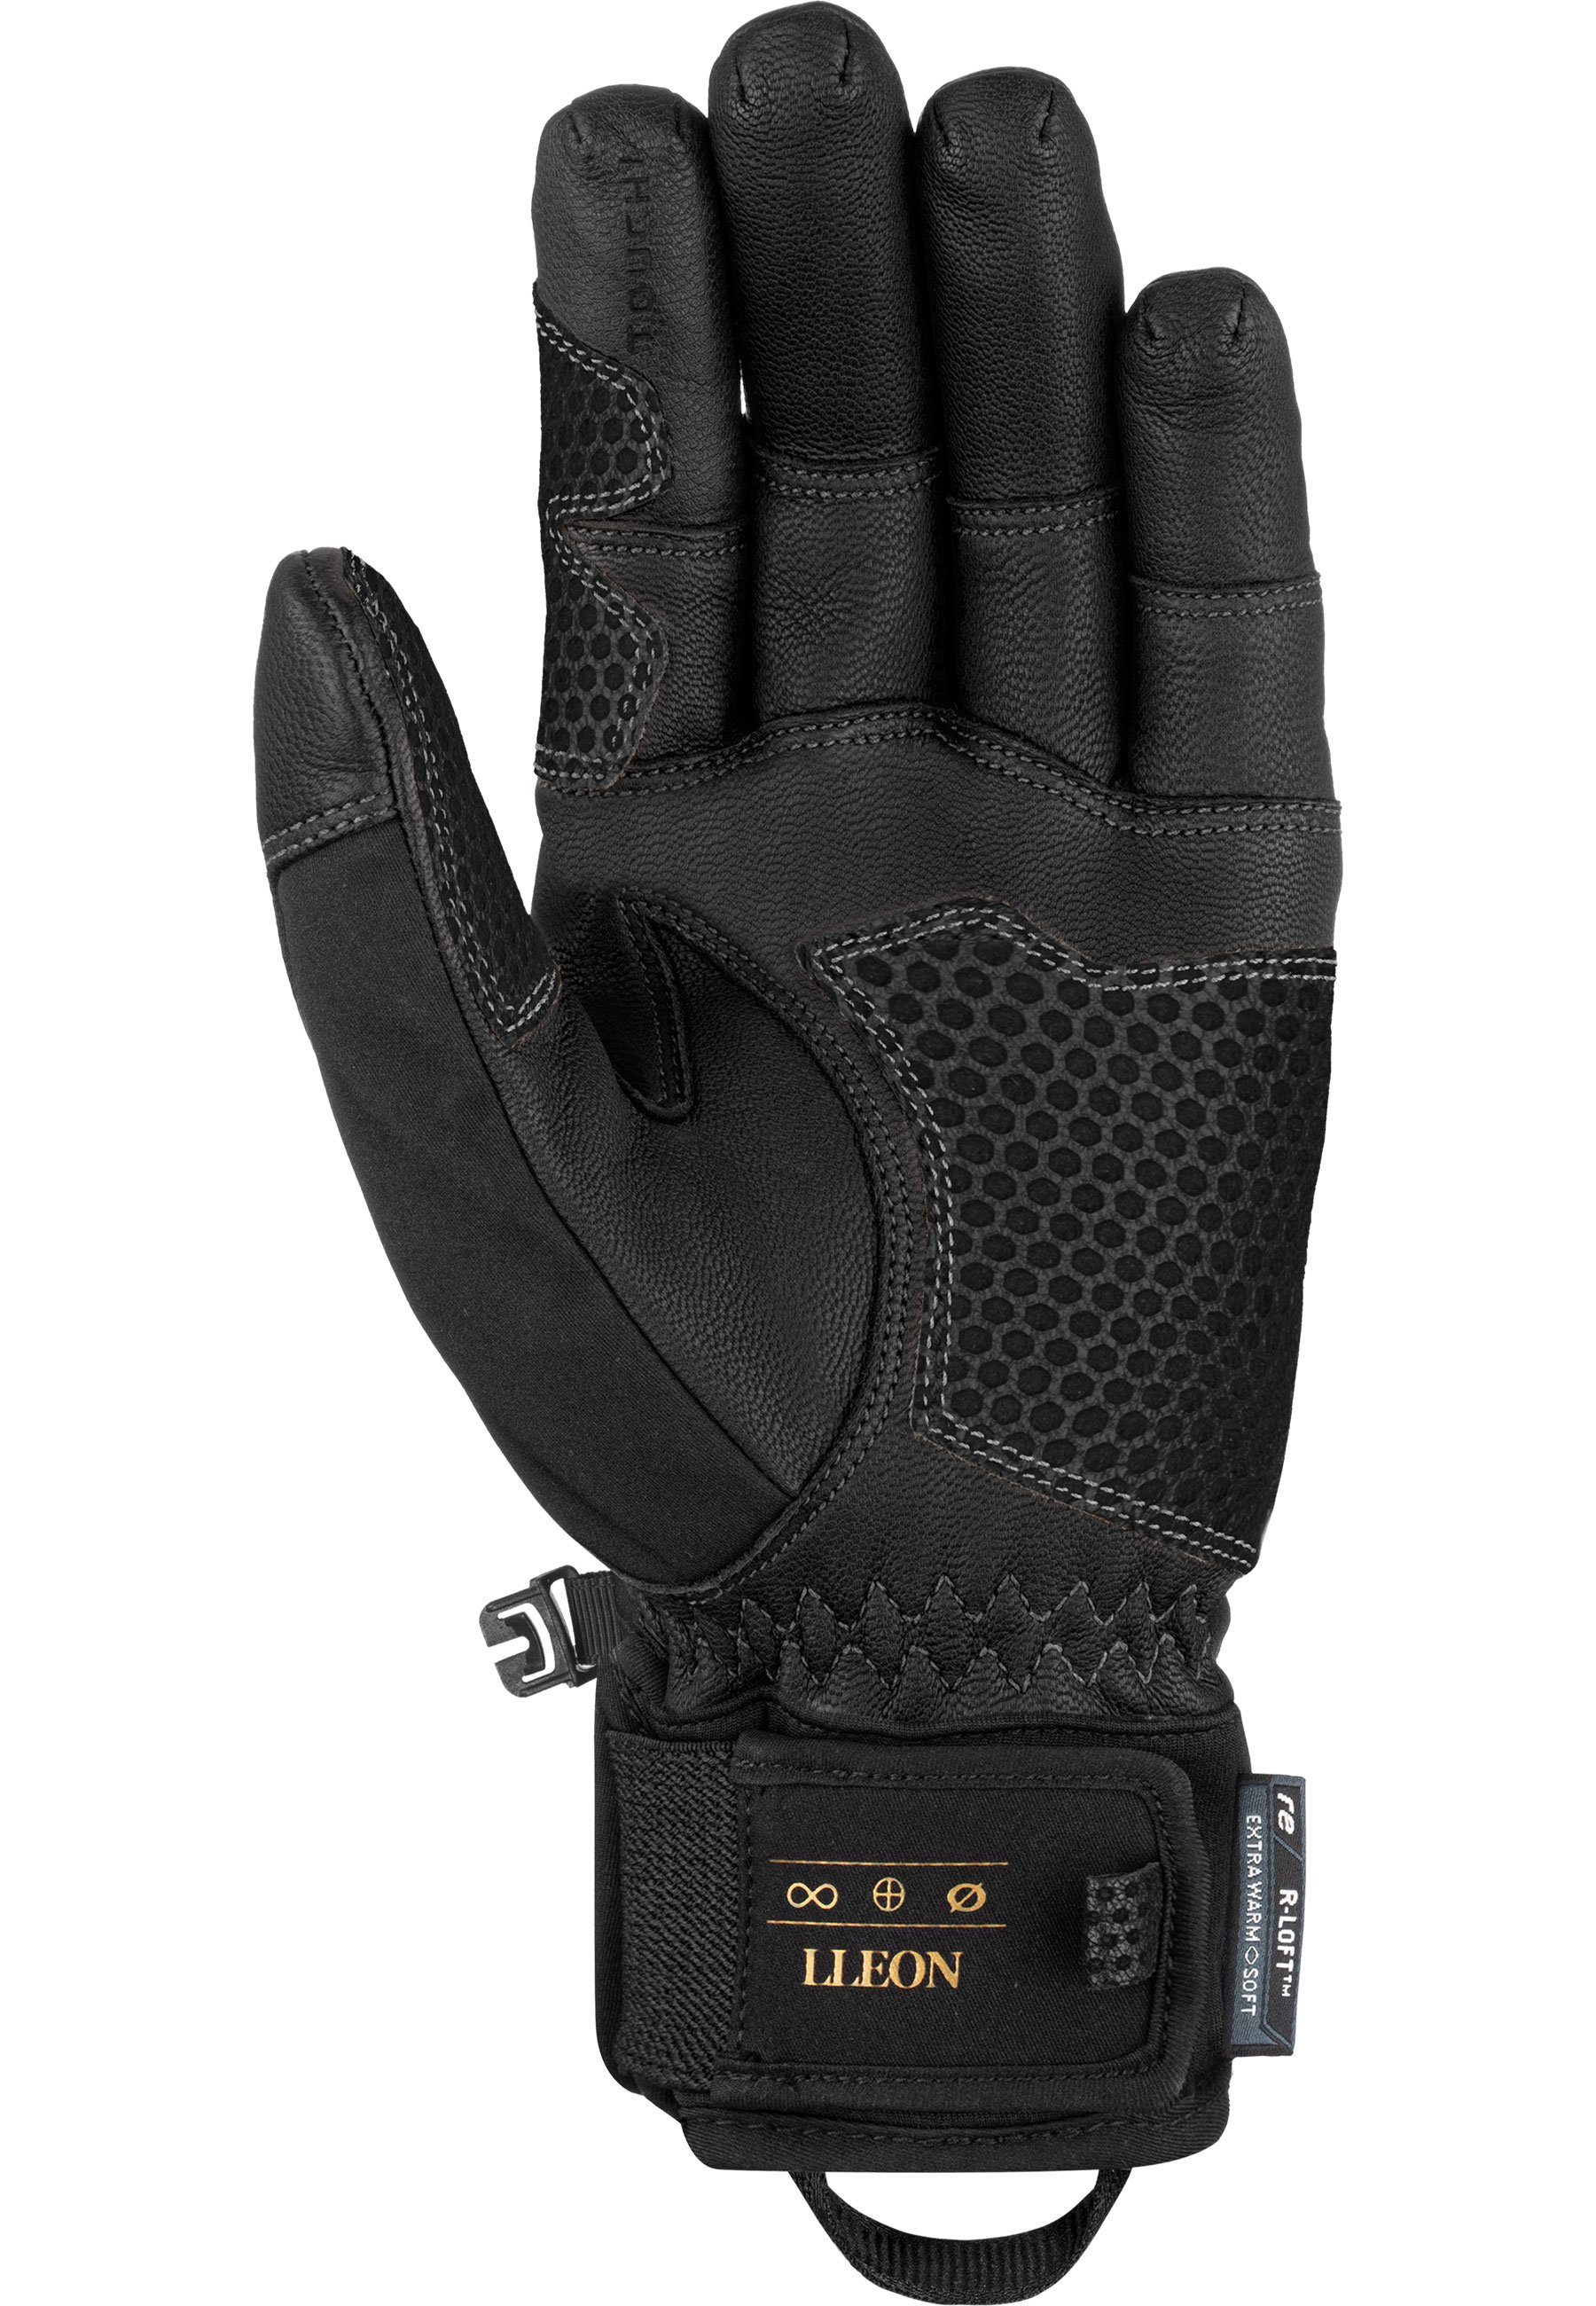 XT Lleon Touchscreen-Funktion schwarz-goldfarben Skihandschuhe mit Reusch R-TEX®